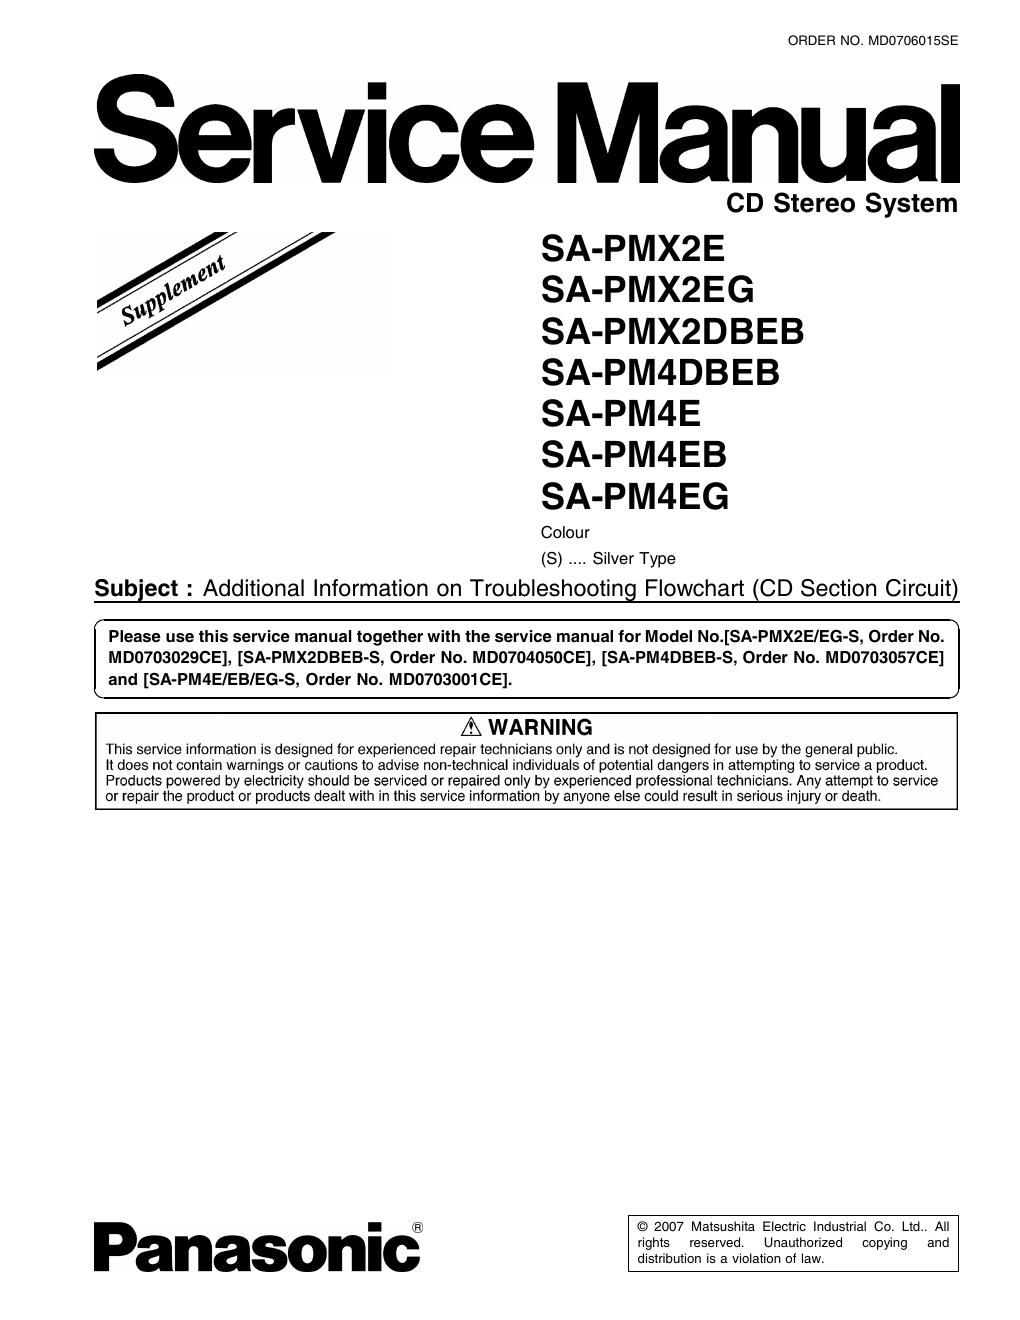 panasonic sa pm 4 eb service manual